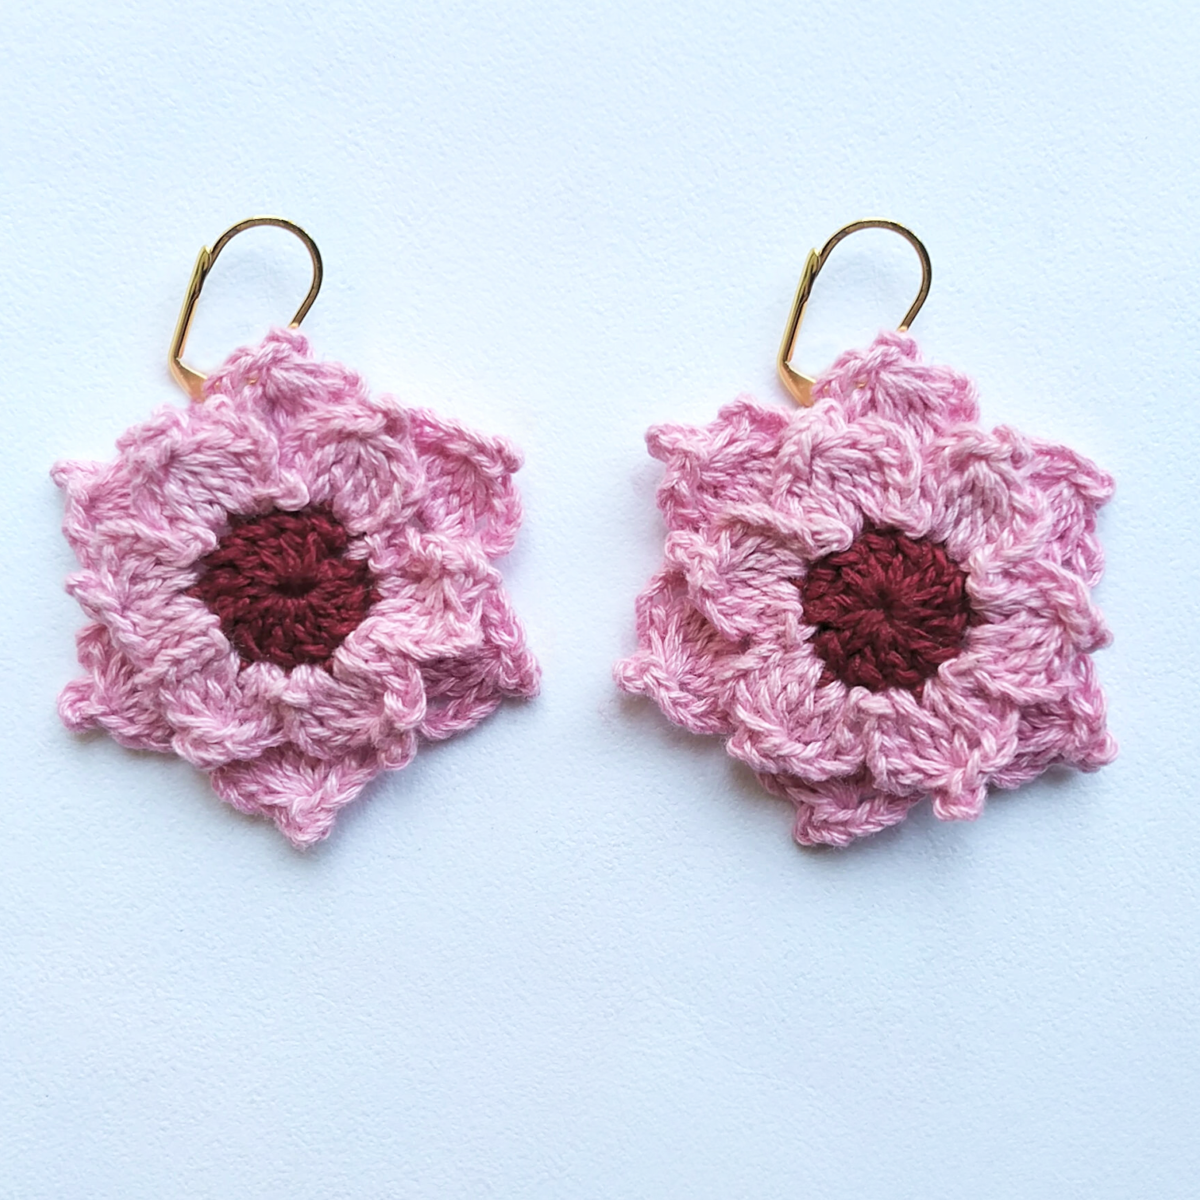 Blossom Handcrafted Crochet Set